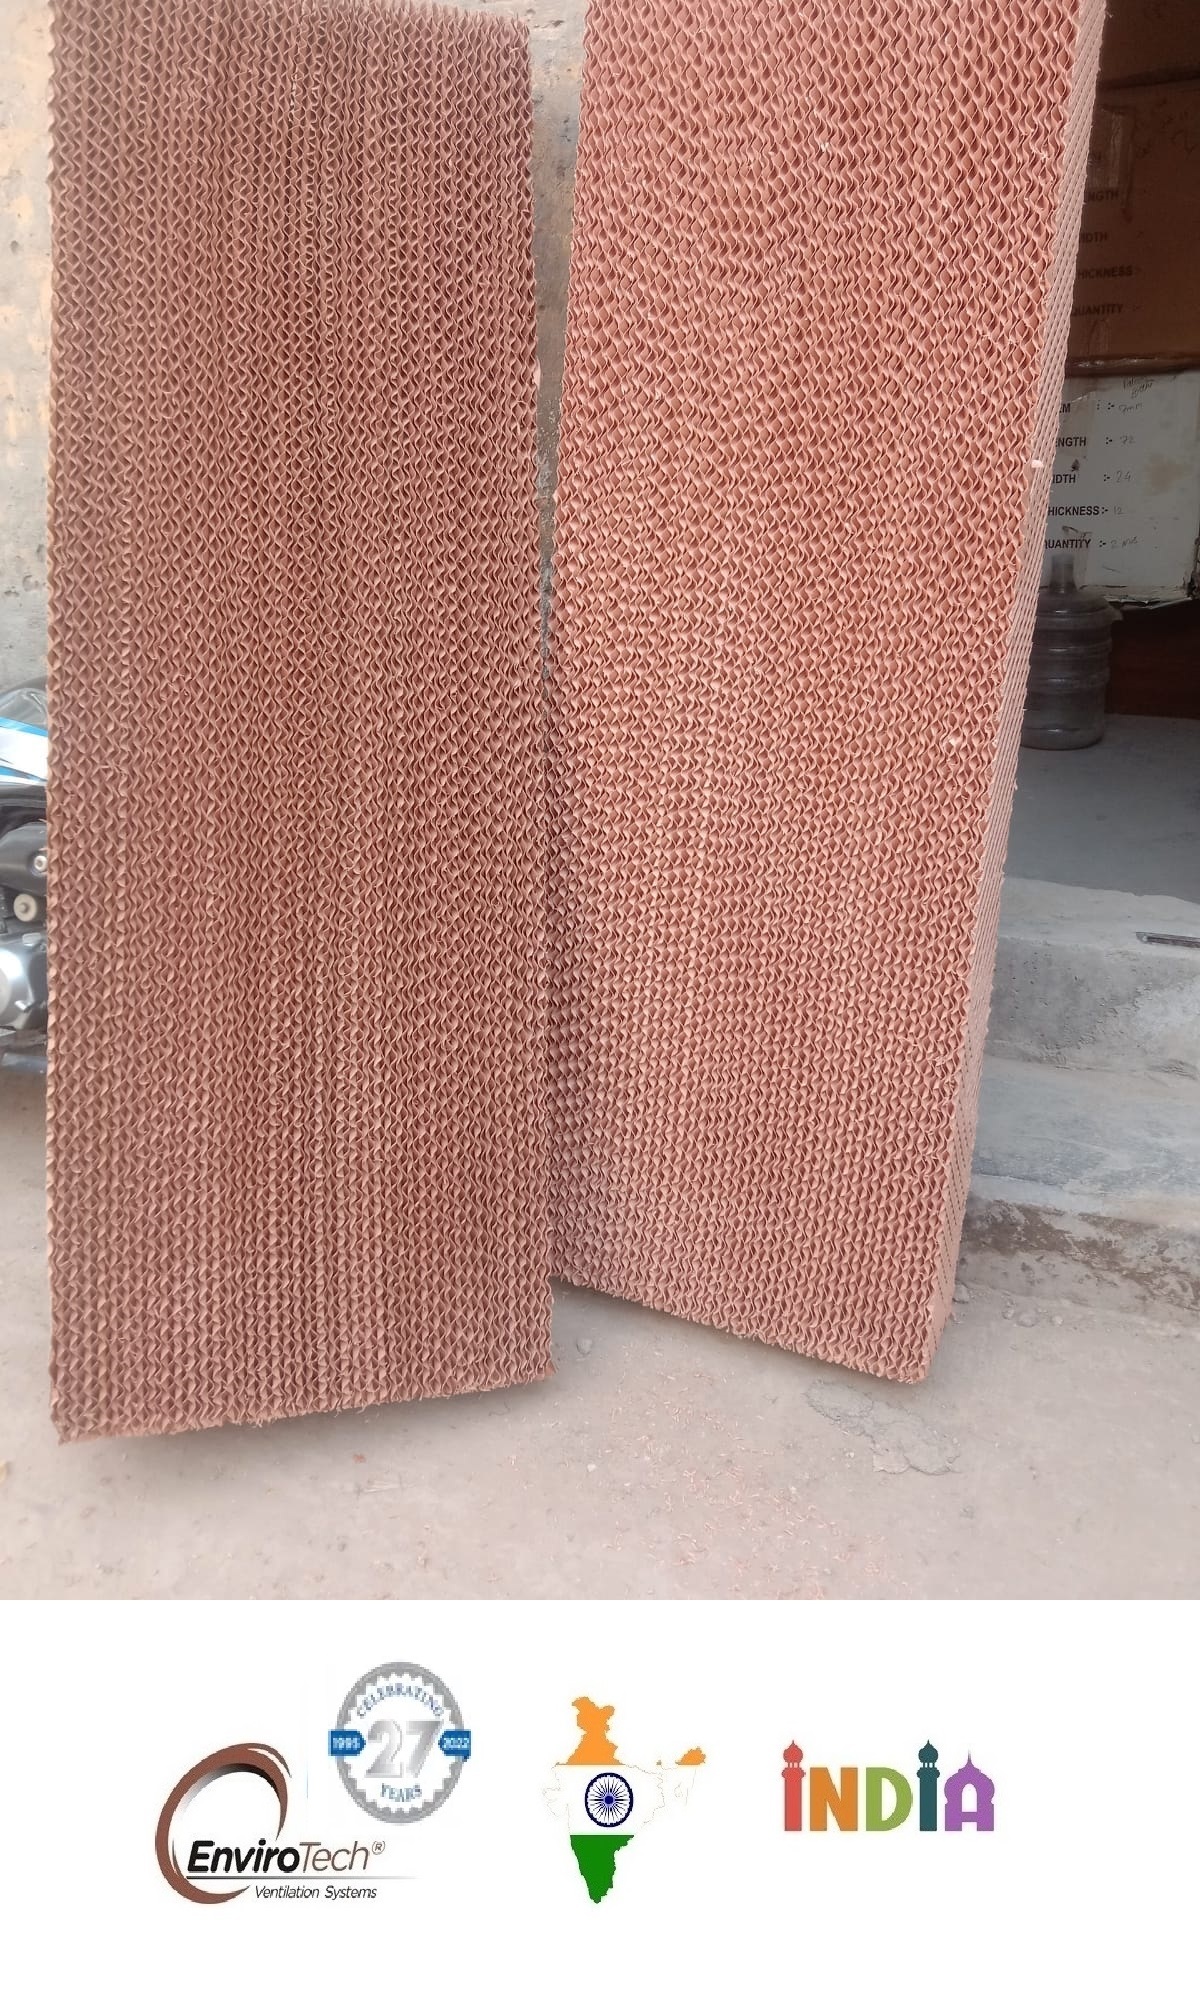 Evaporative Cooling Pad Manufacturer In Ahmedabad Gujarat